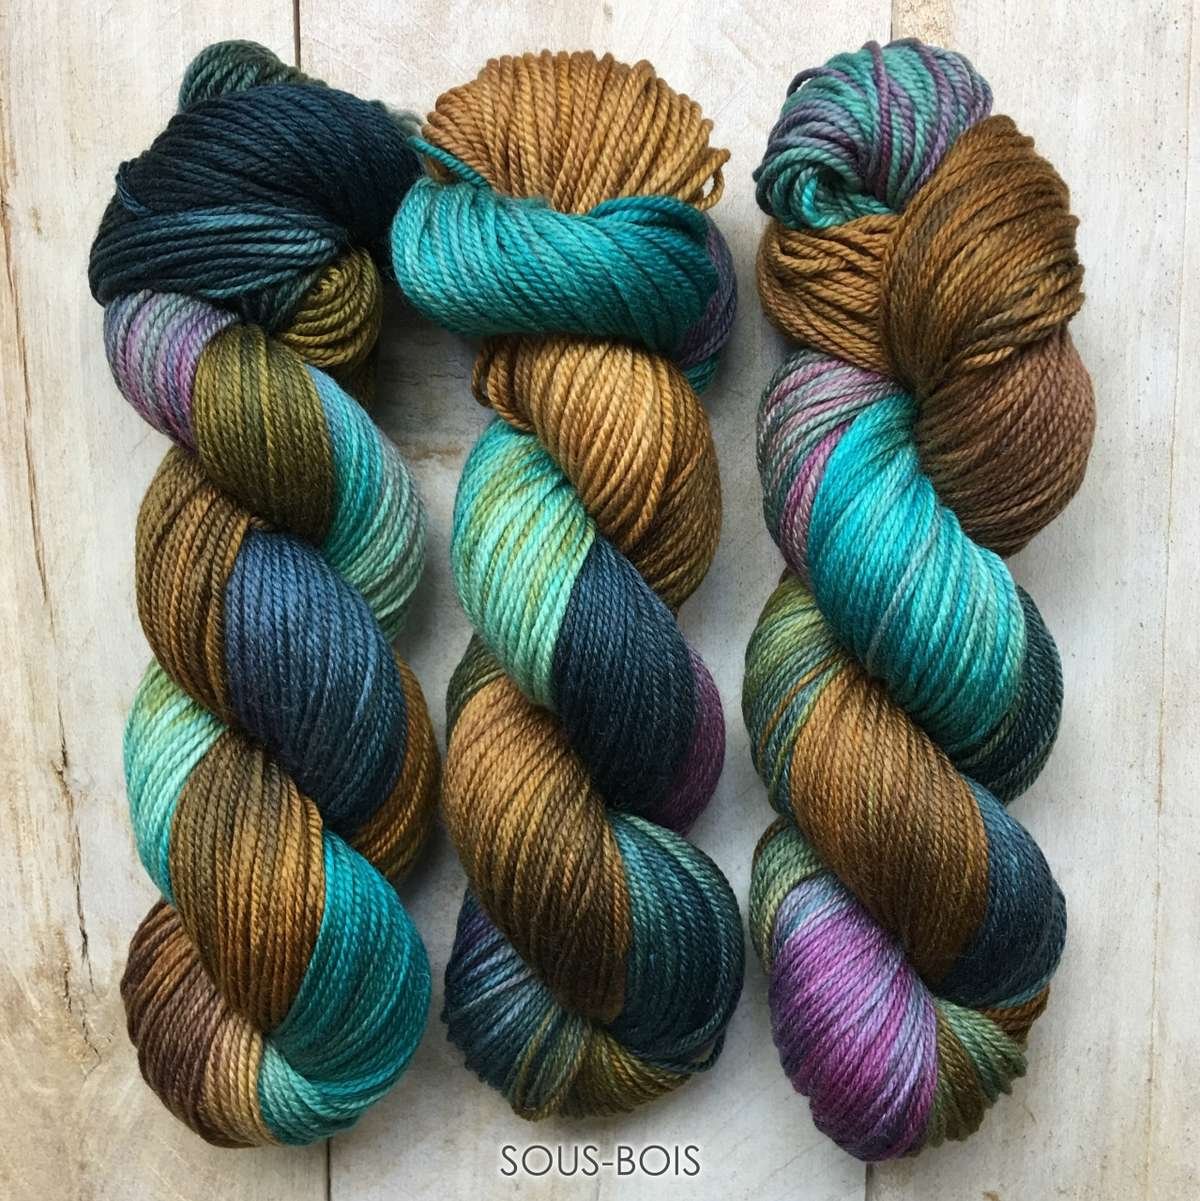 Hand-dyed yarn Louise Robert Sous-bois